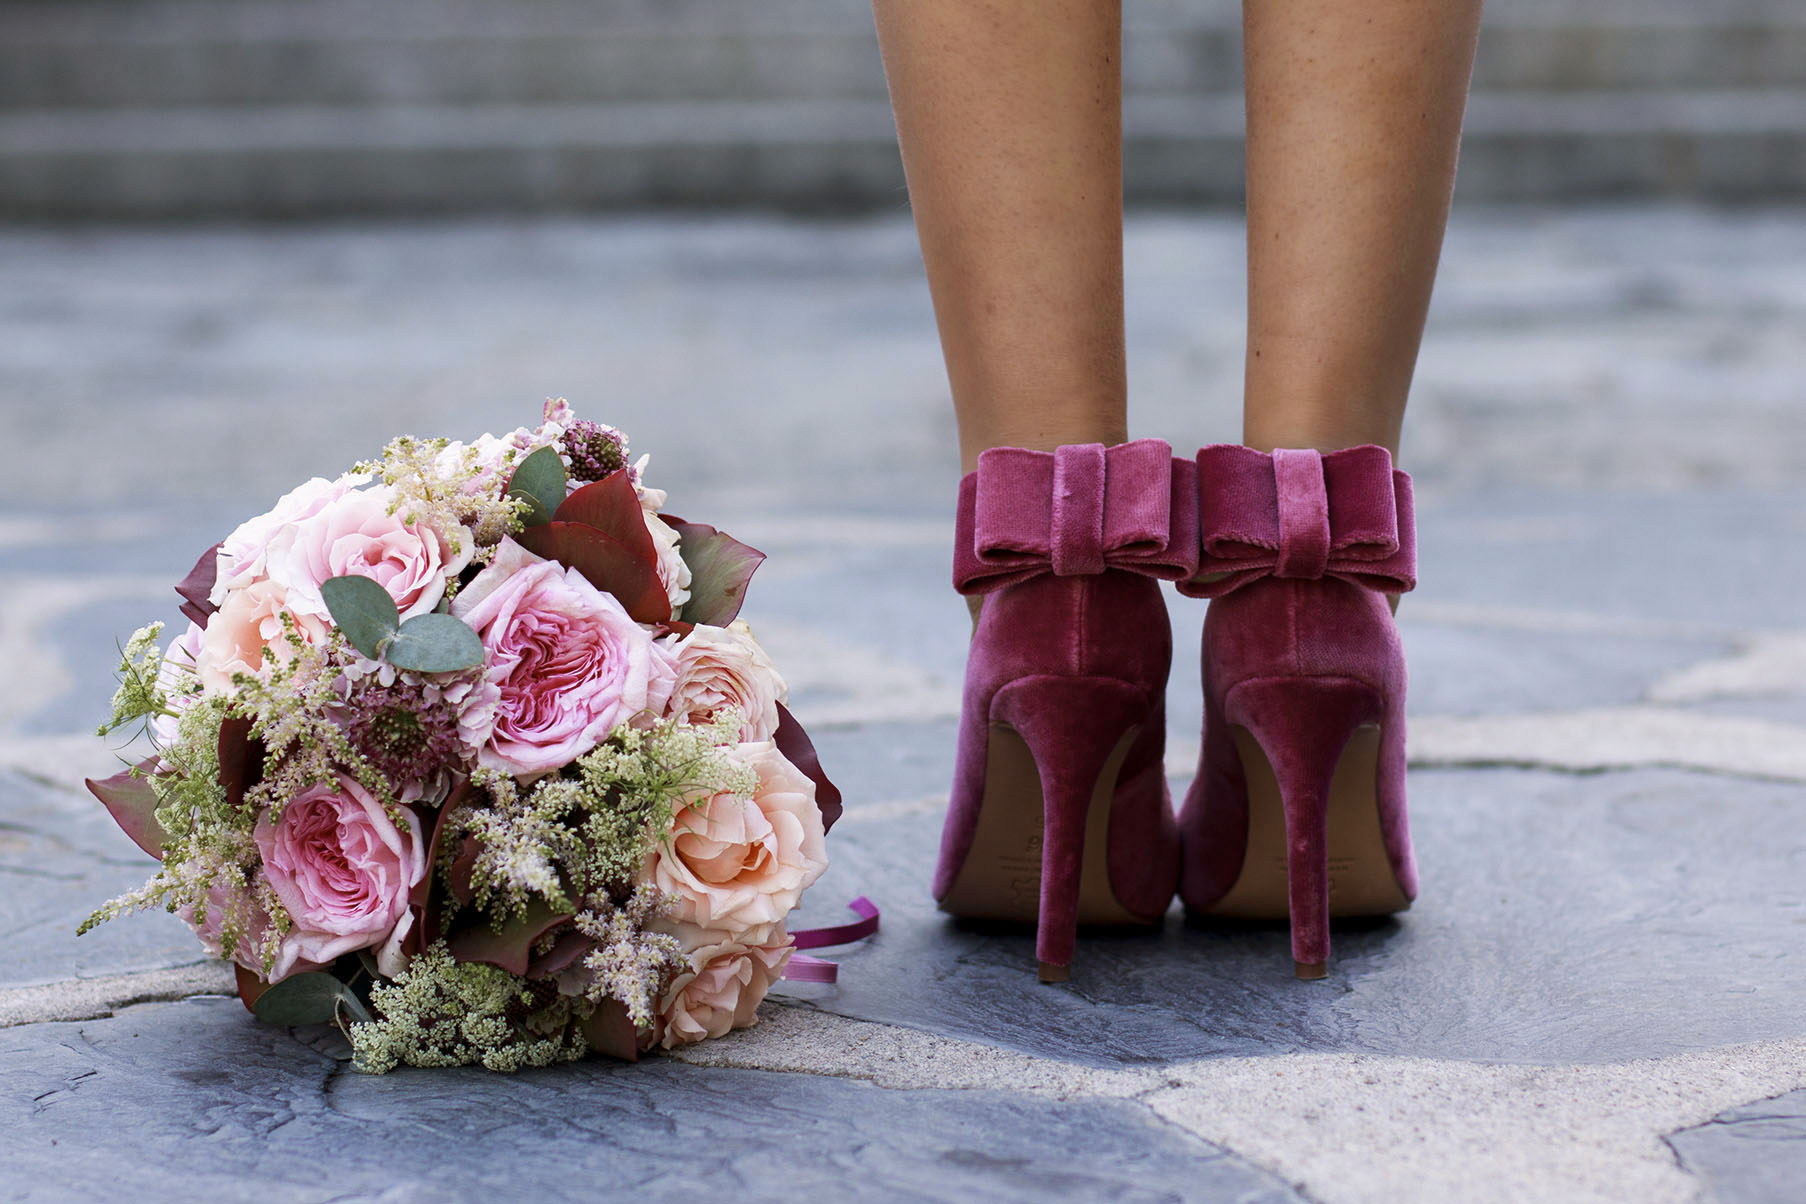 Zapatos personalizados rosas lazo novia